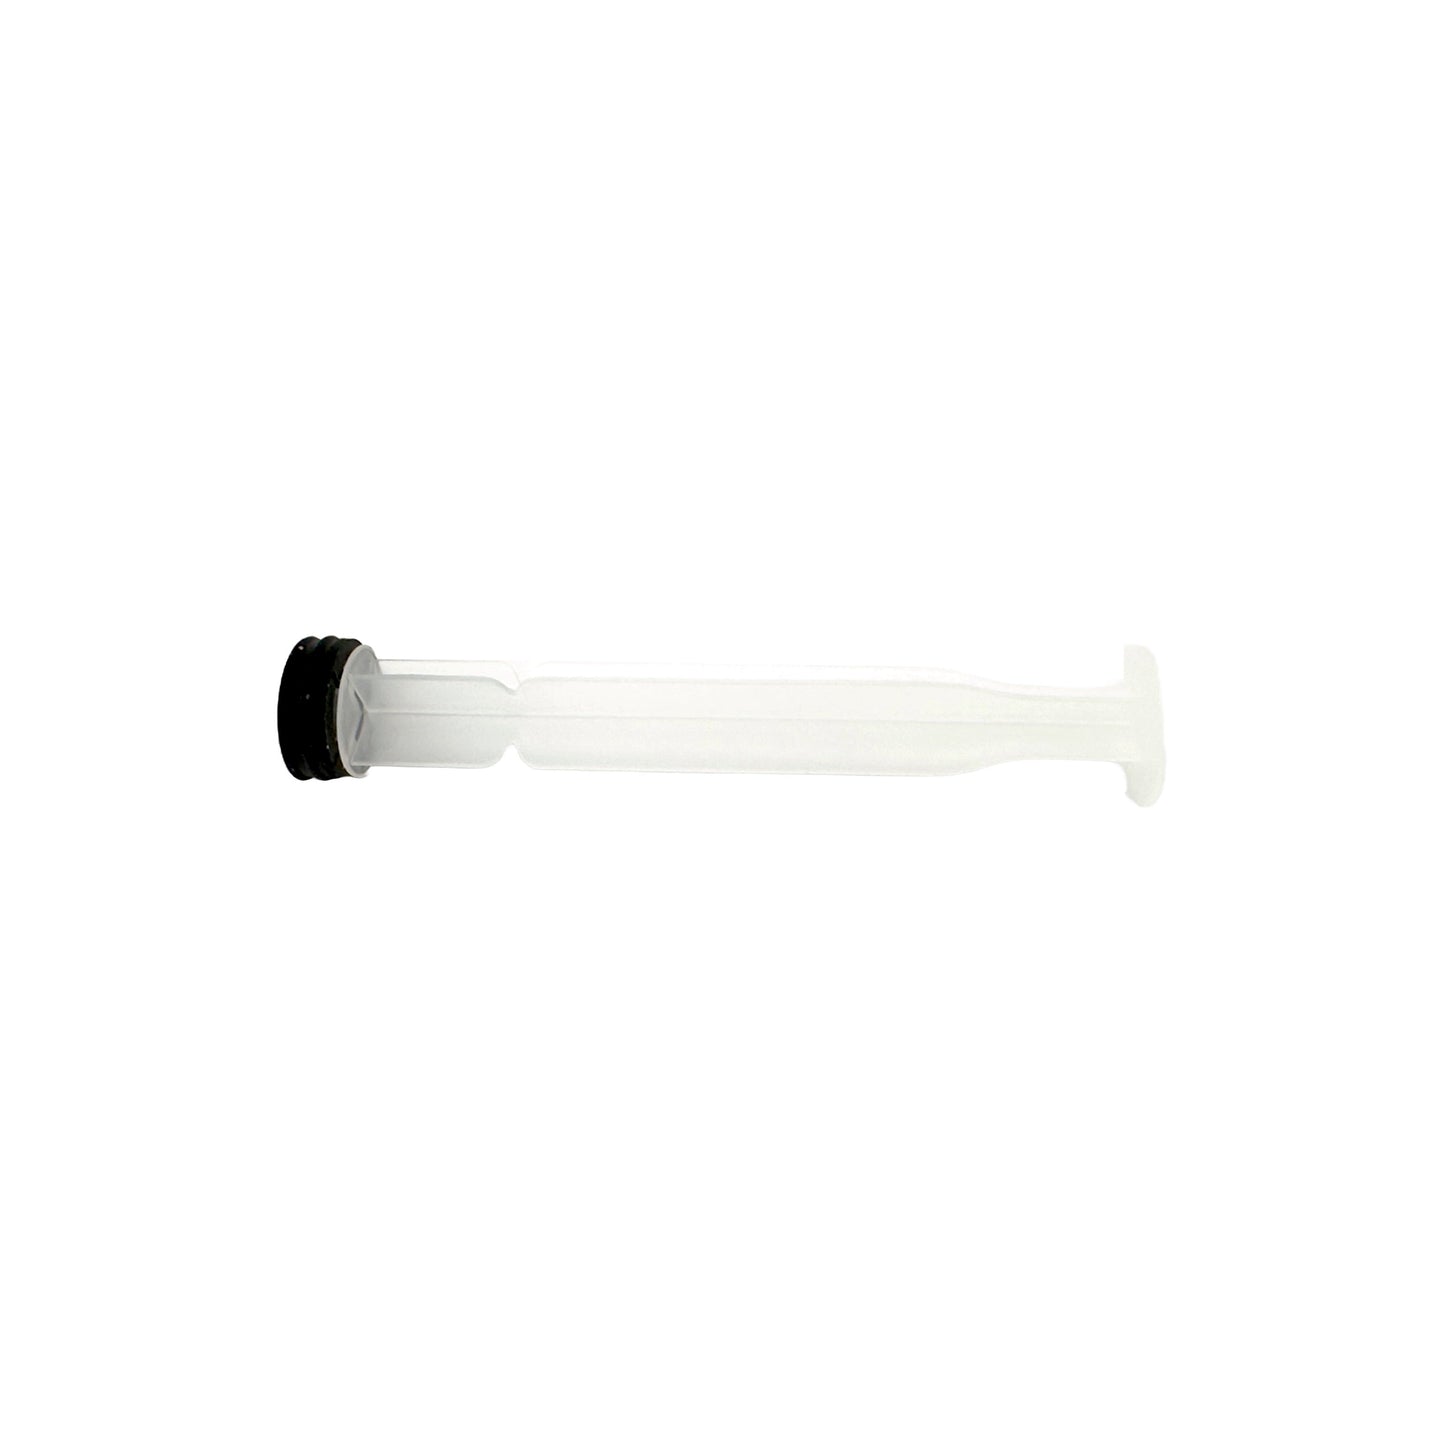 Manual Dispensing Plunger for pneumatic syringes (Bulk)